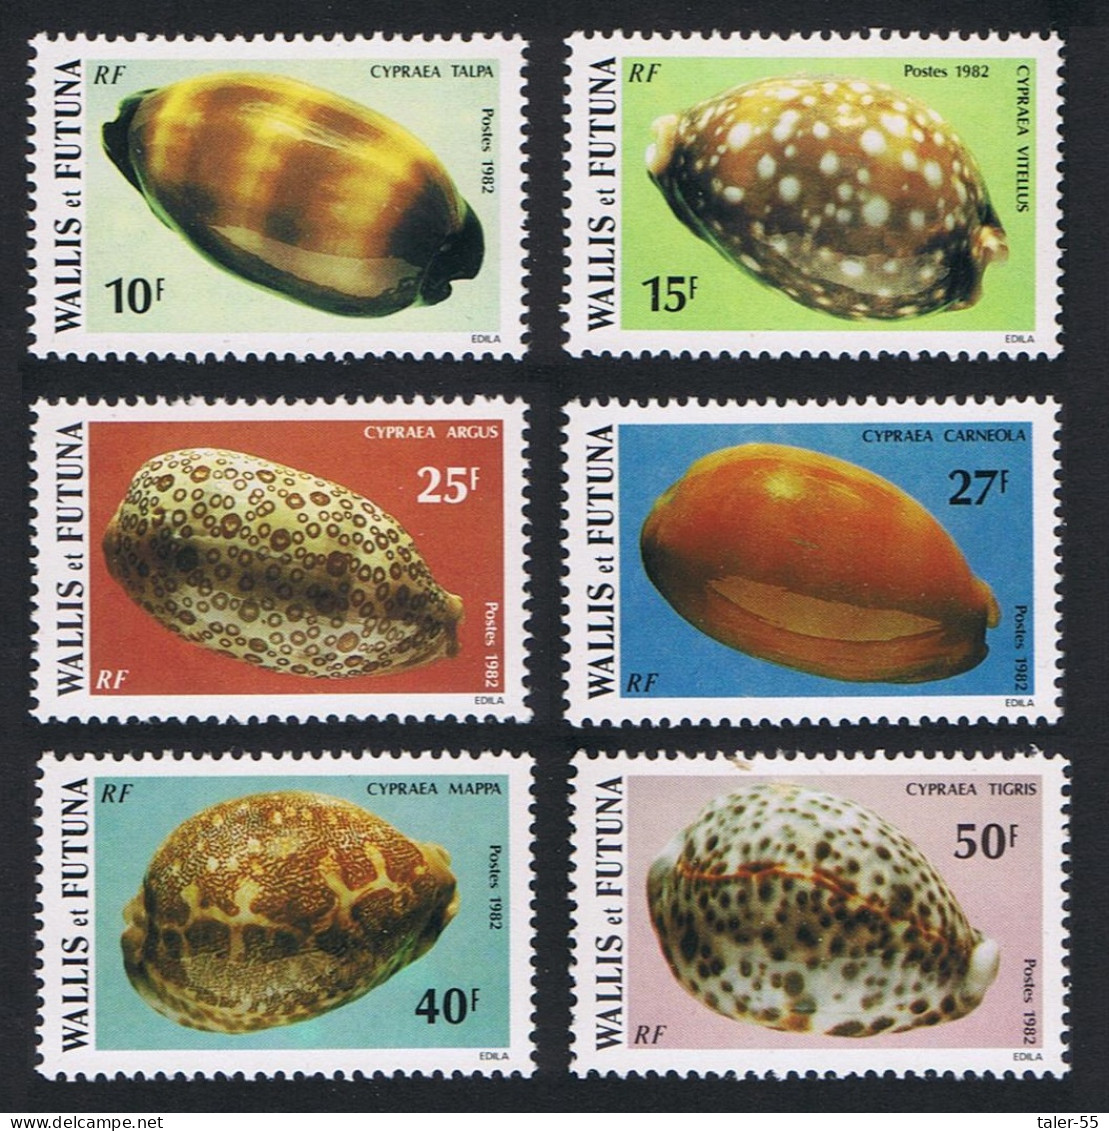 Wallis And Futuna Sea Shells 6v 1982 MNH SG#401-406 Sc#288-293 - Ungebraucht